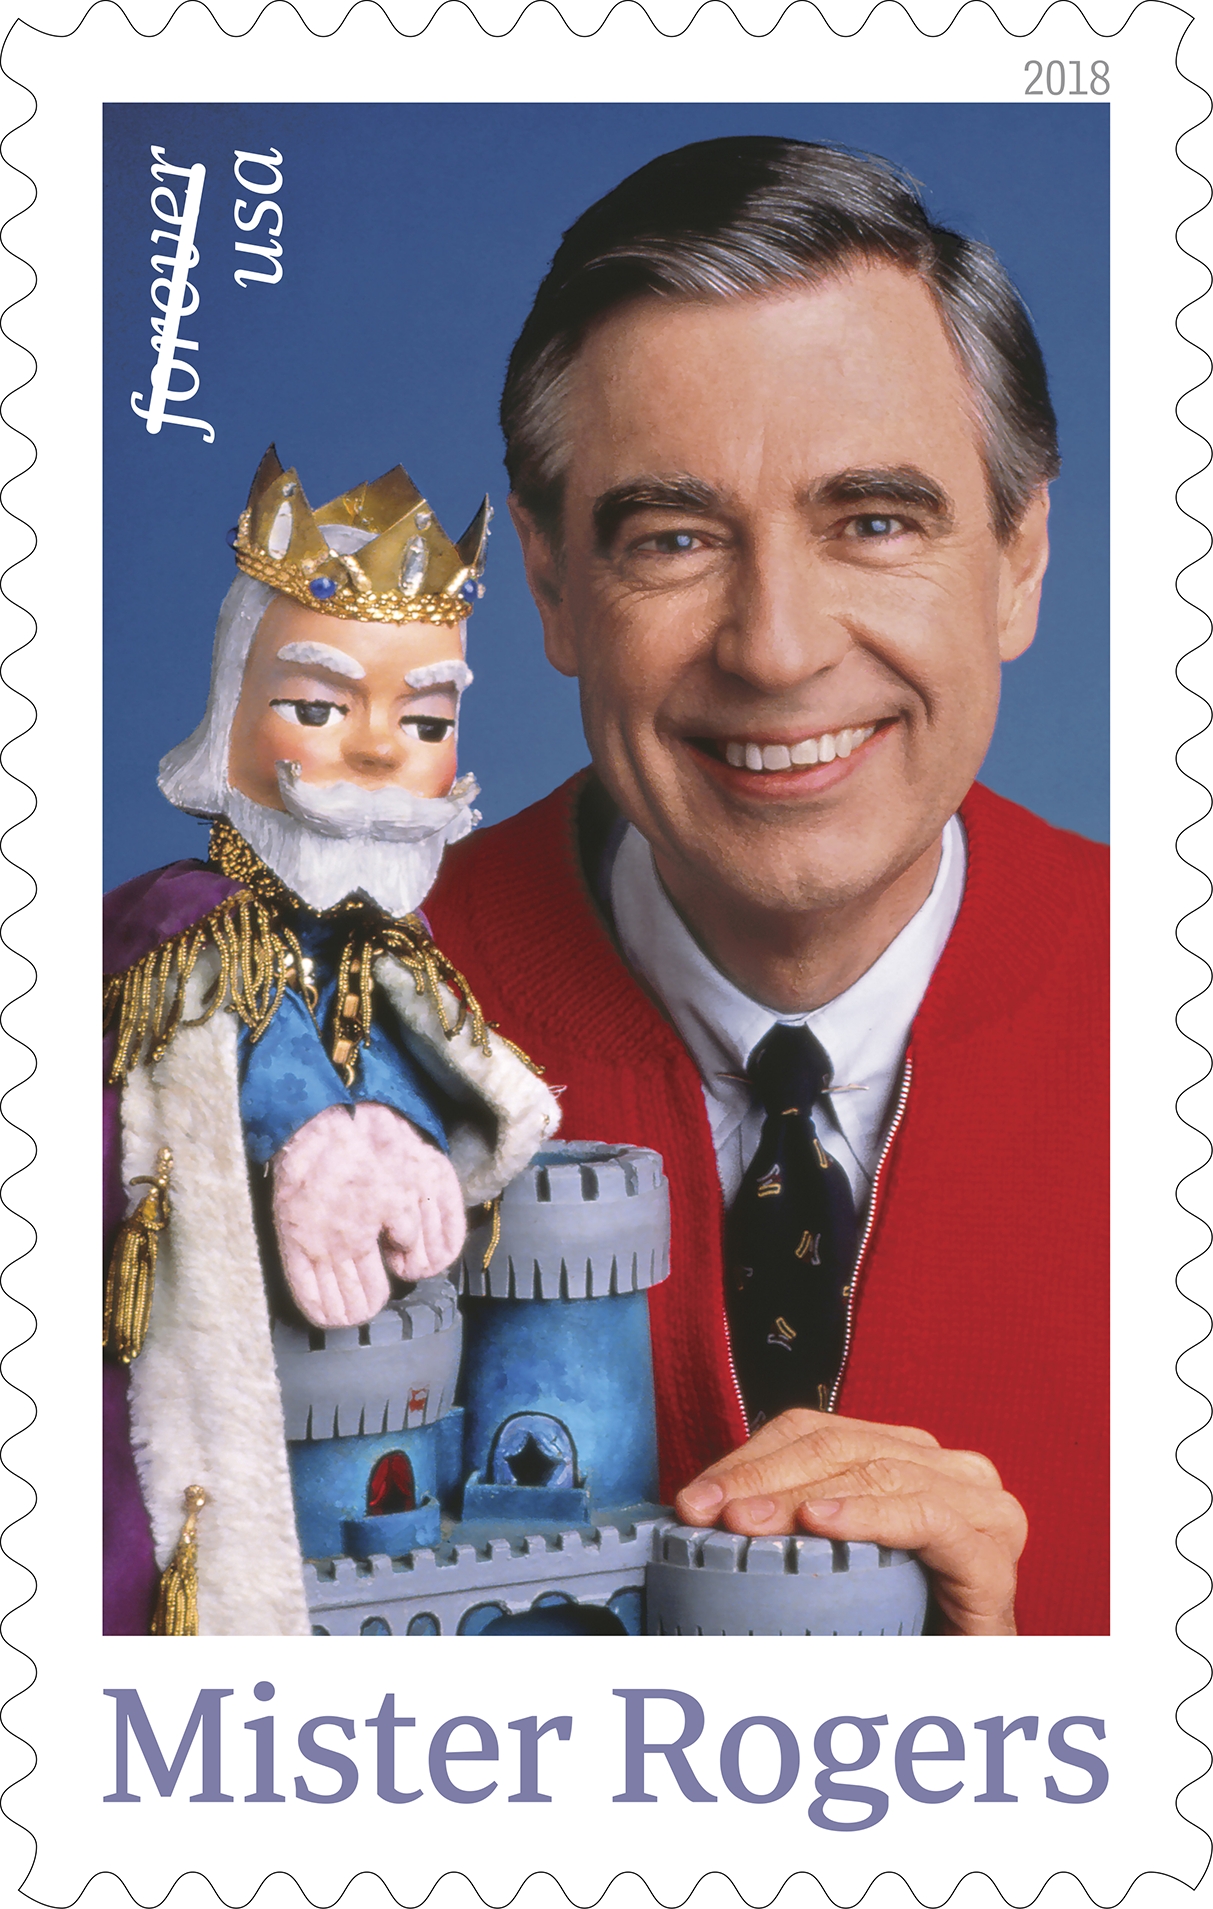 USPS Releases Mister Rogers Forever Stamp